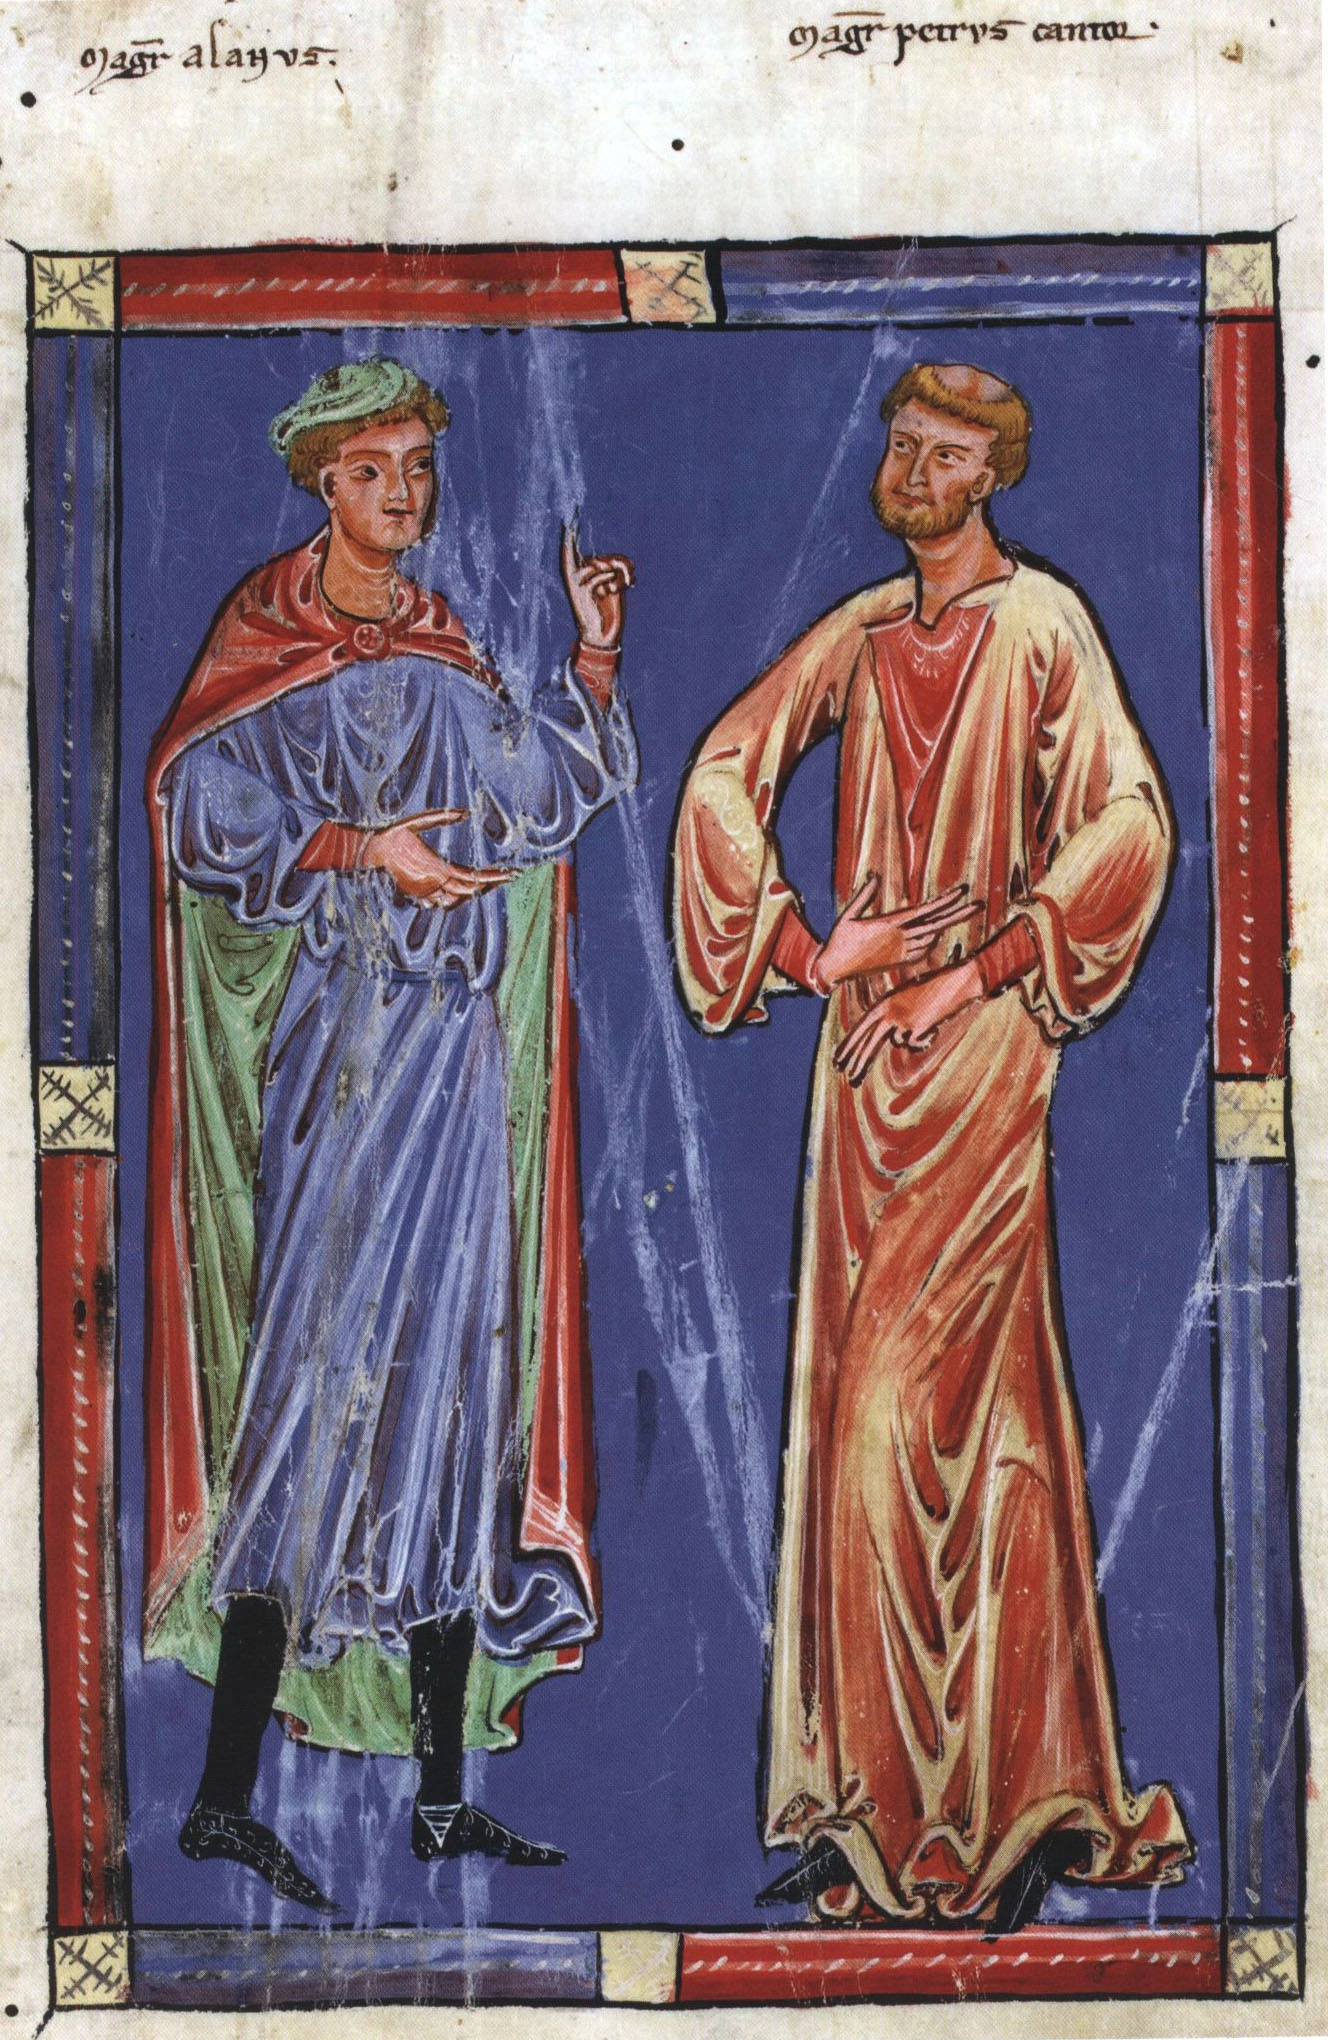 Alanus ab Insulis Chartres